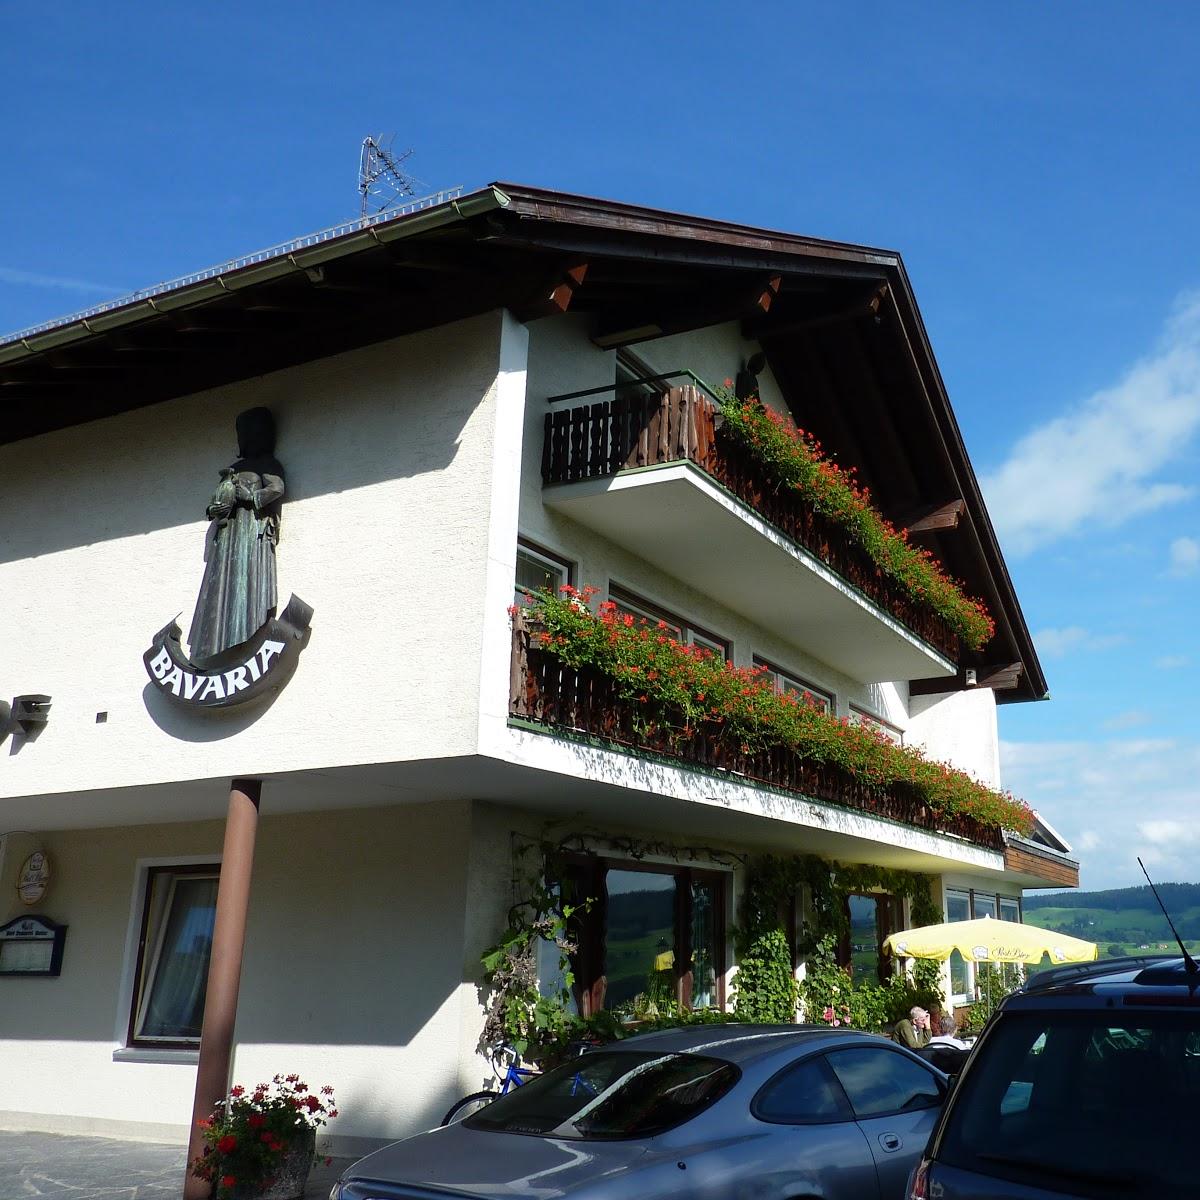 Restaurant "Bavaria" in  Allgäu